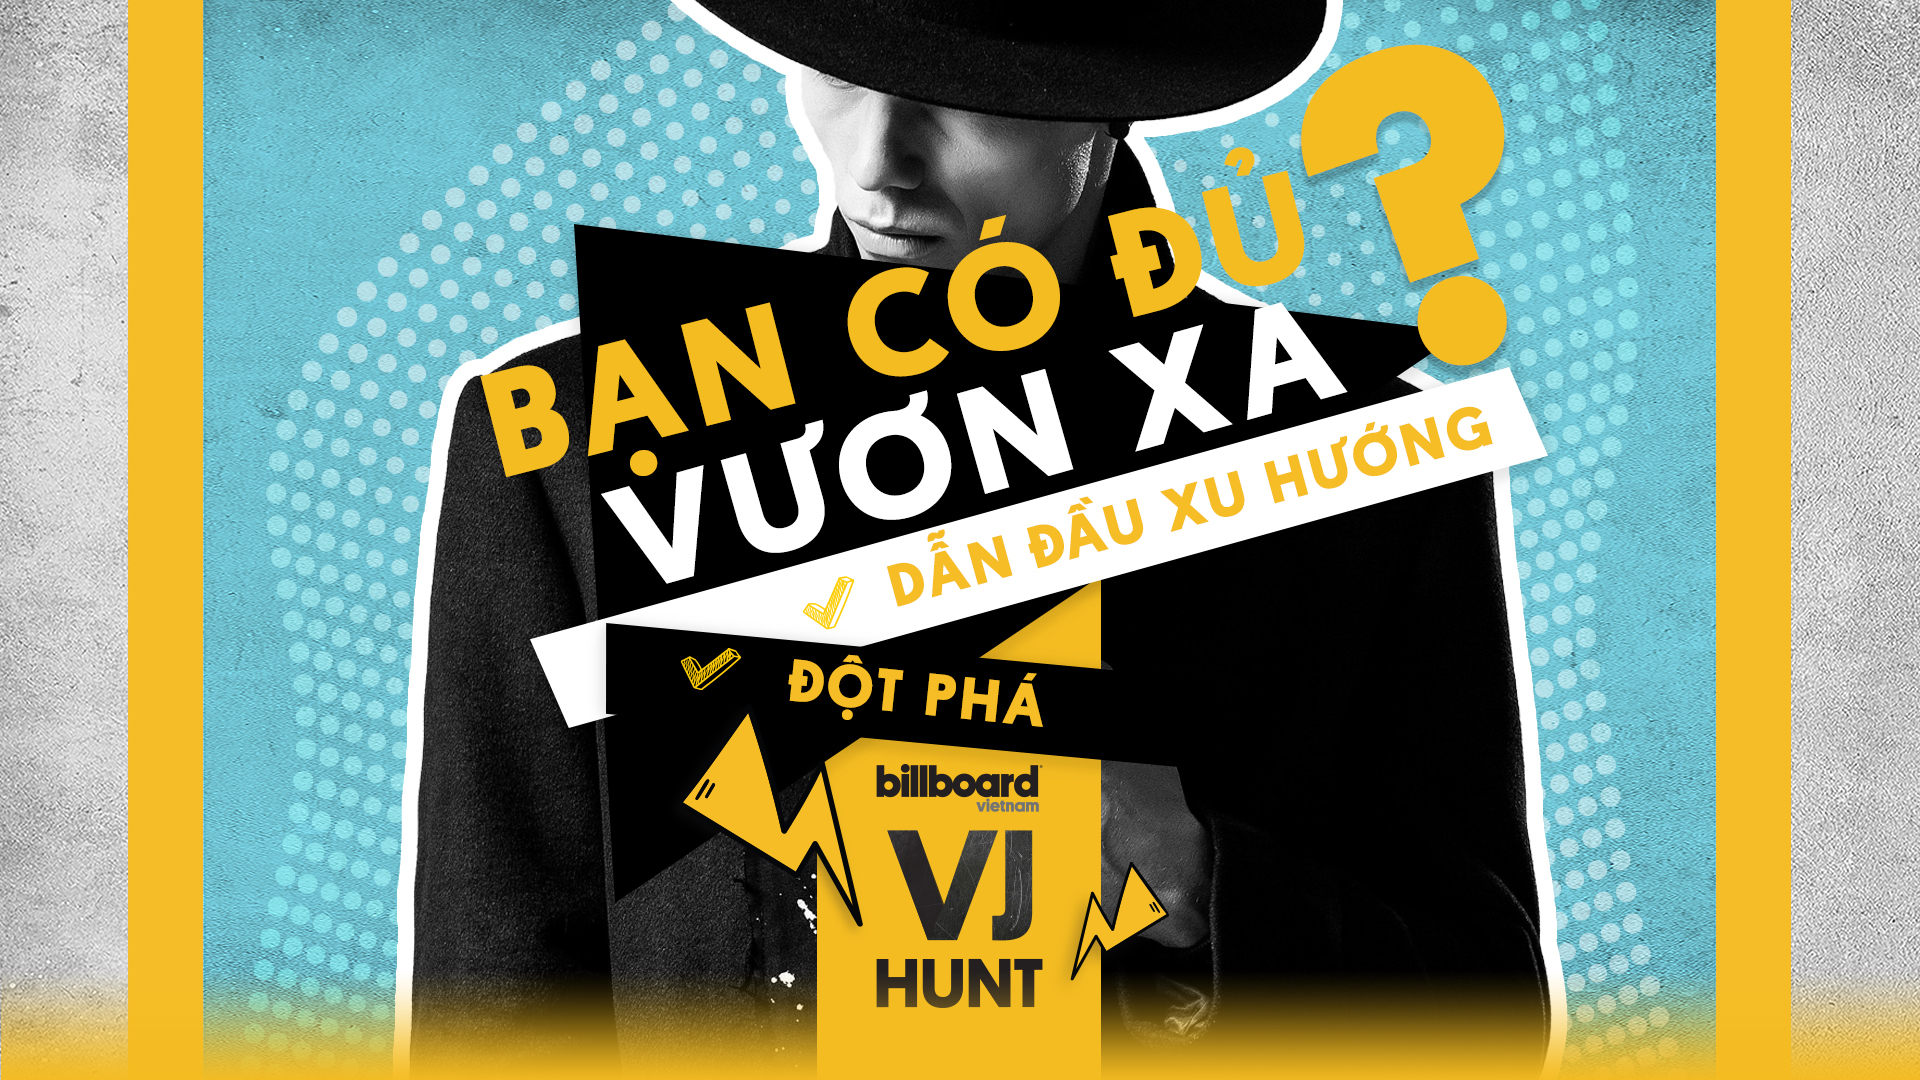 ​Billboard Vietnam hunts for VJ